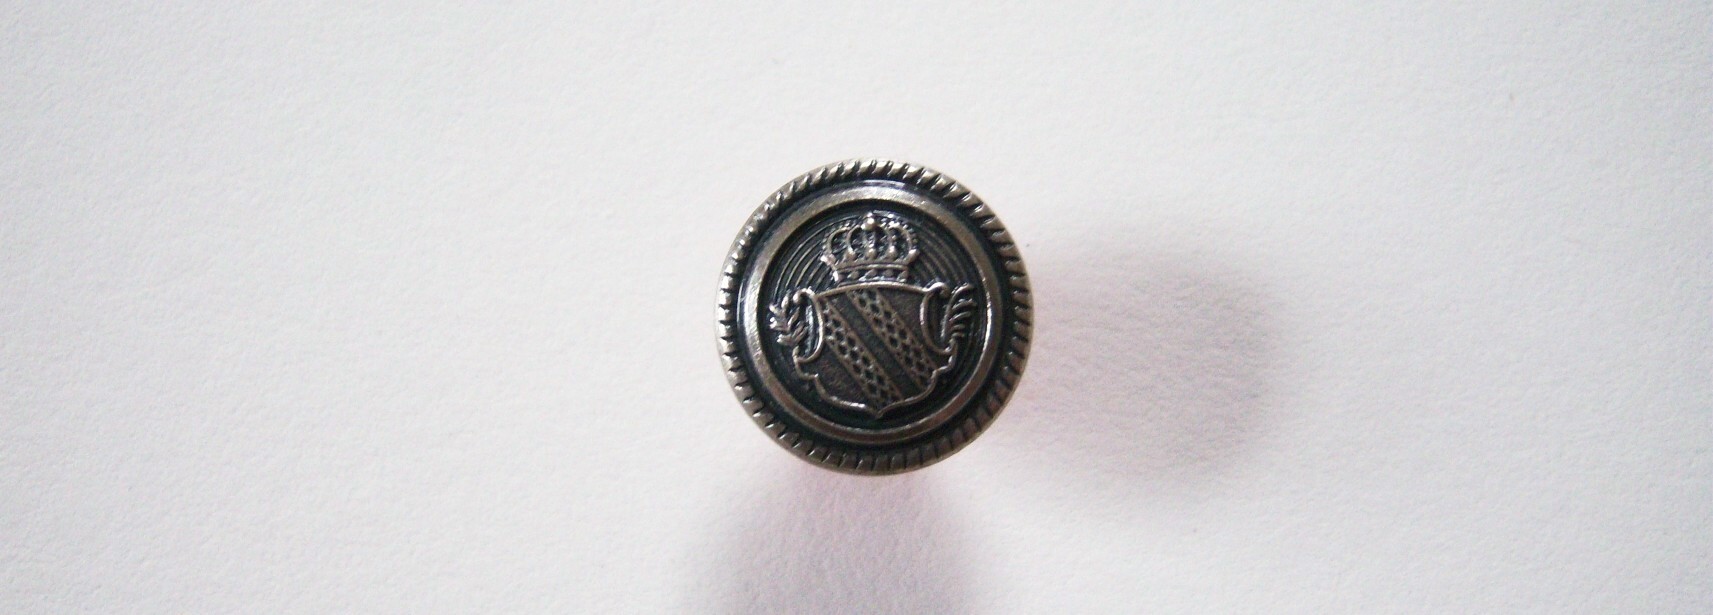 Silver/Black Metal Crest 5/8" Shank Button